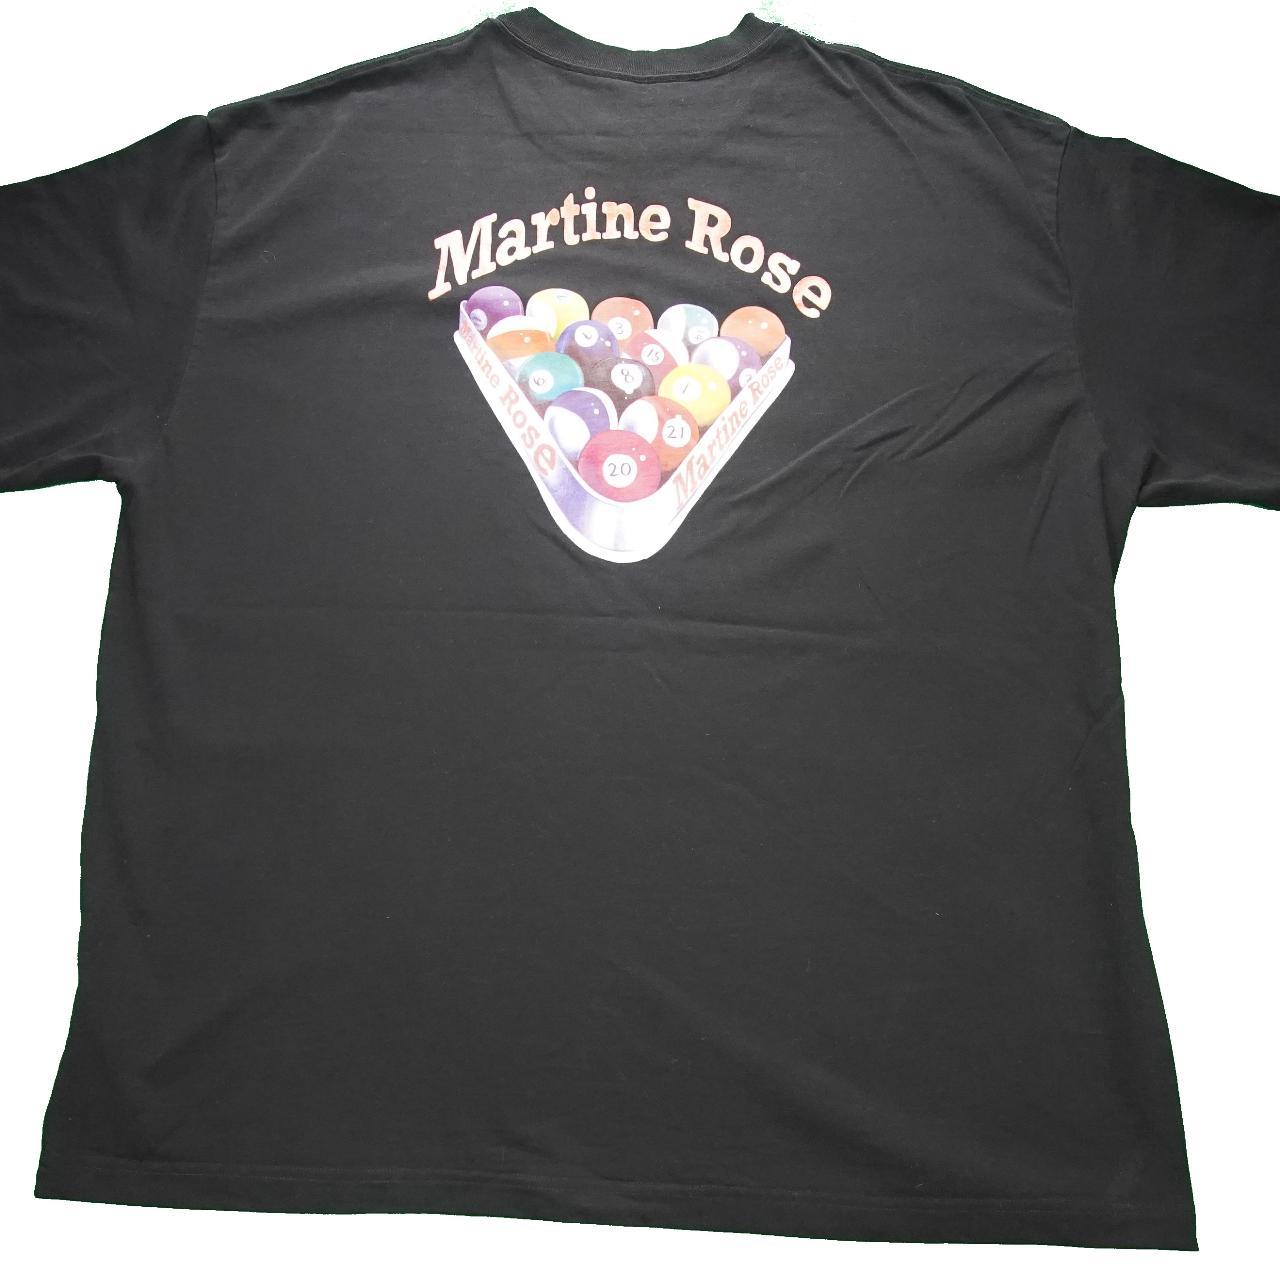 Martine Rose Men's T-shirt (3)